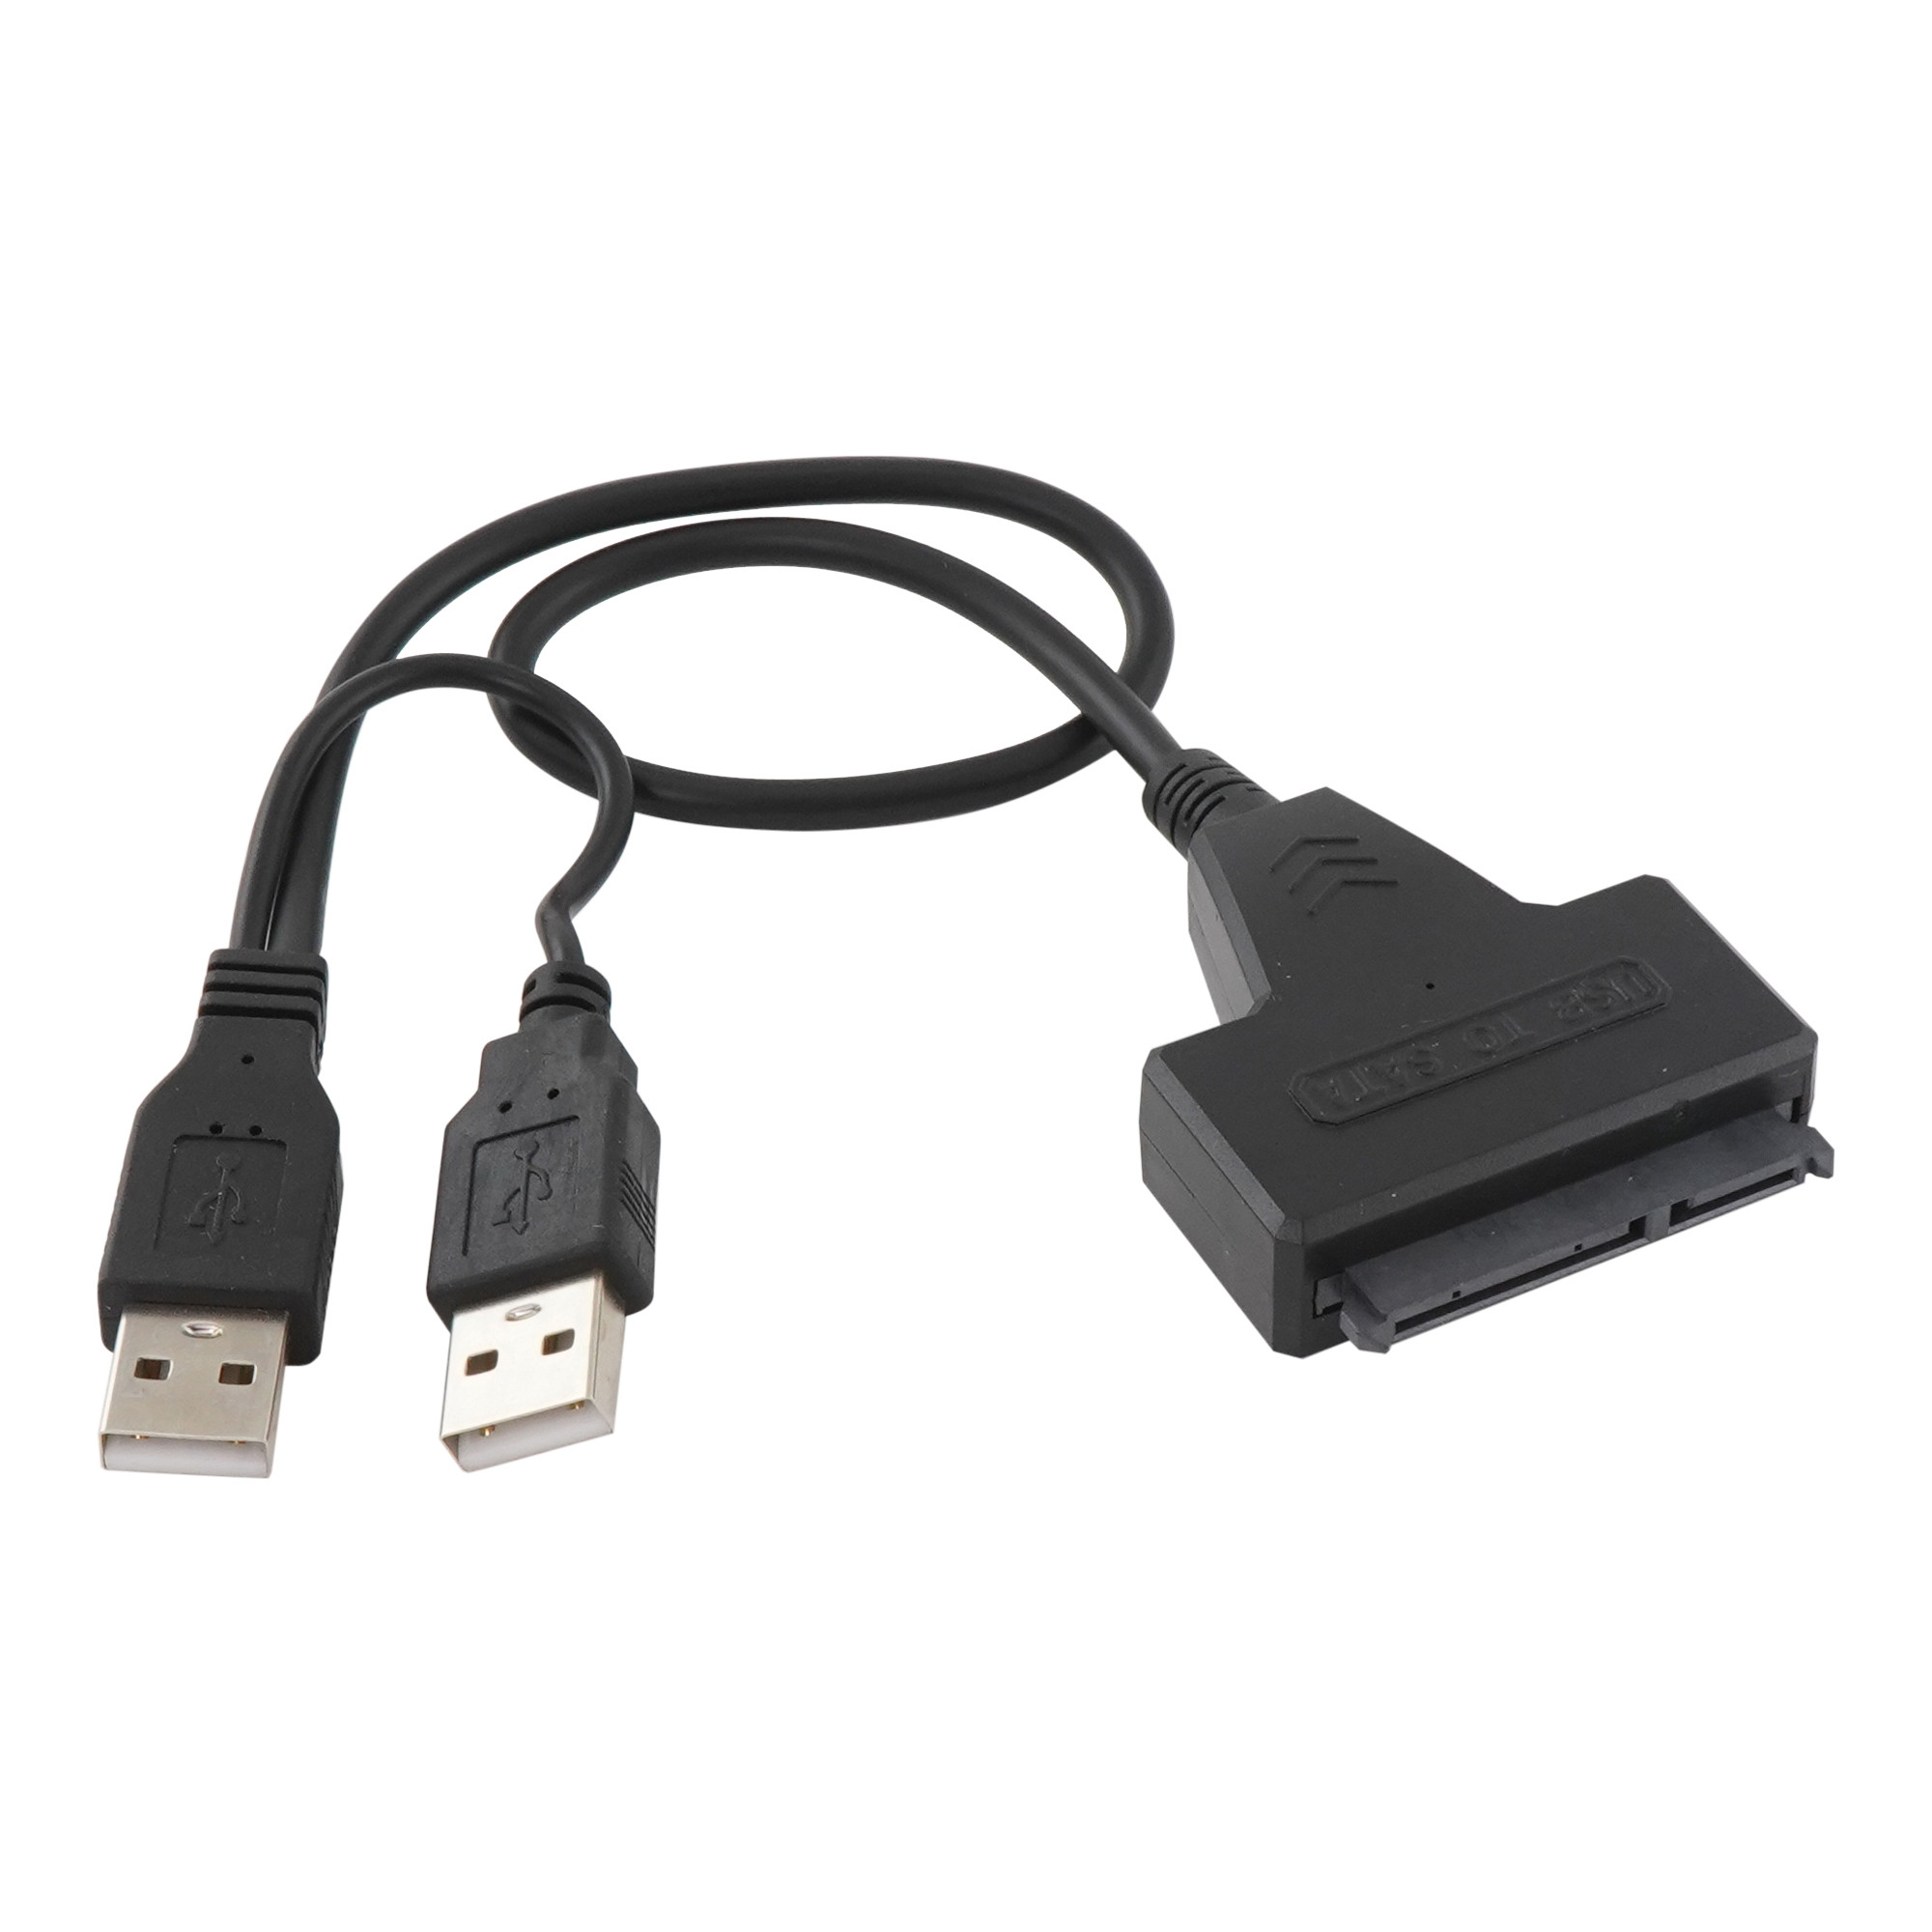 Купить  Переходник USB 2.0 на SATA